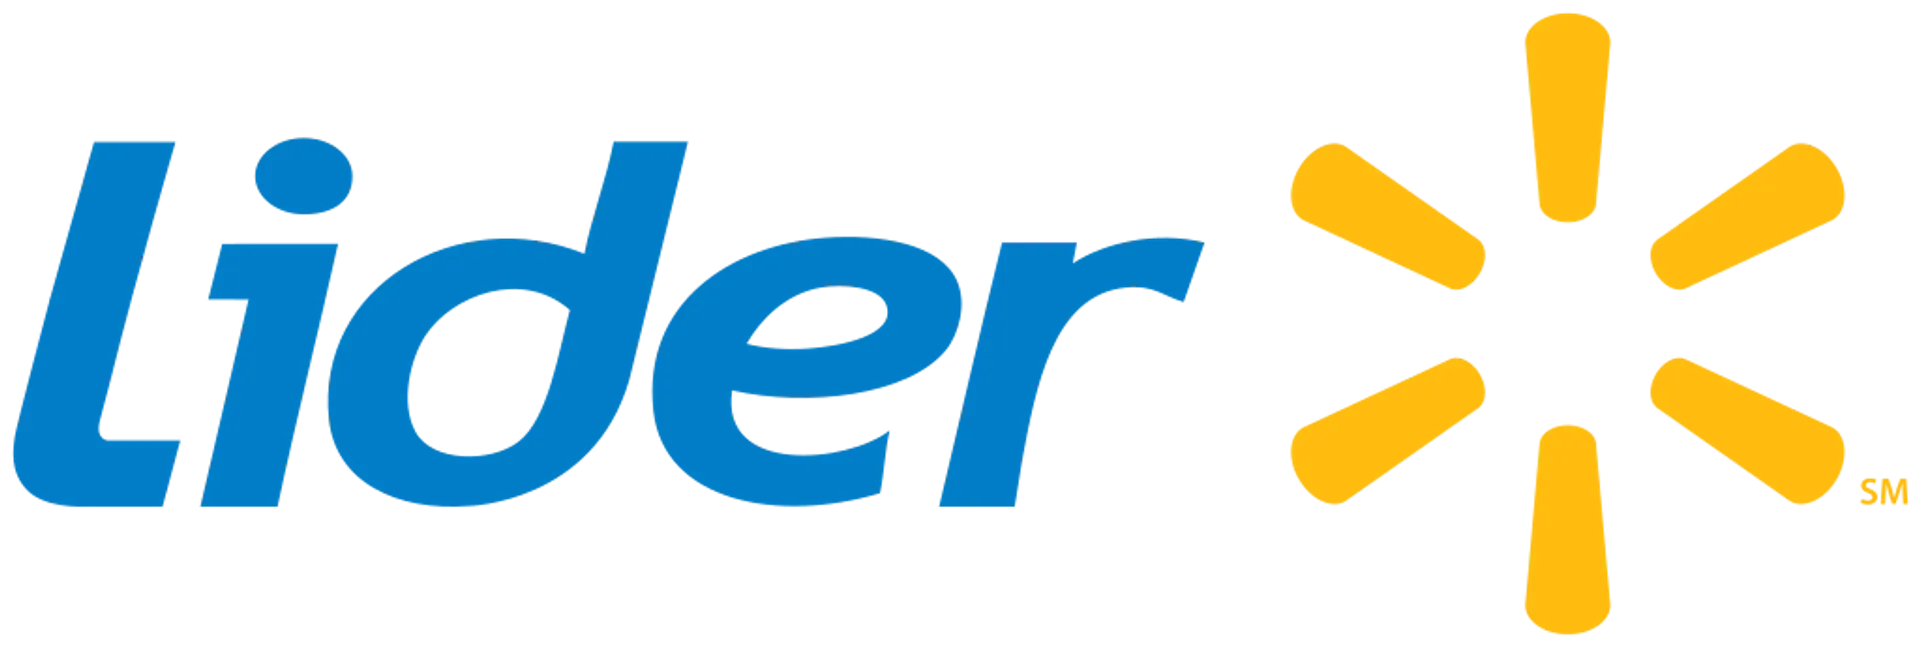 LIDER SUPERMERCADOS logo